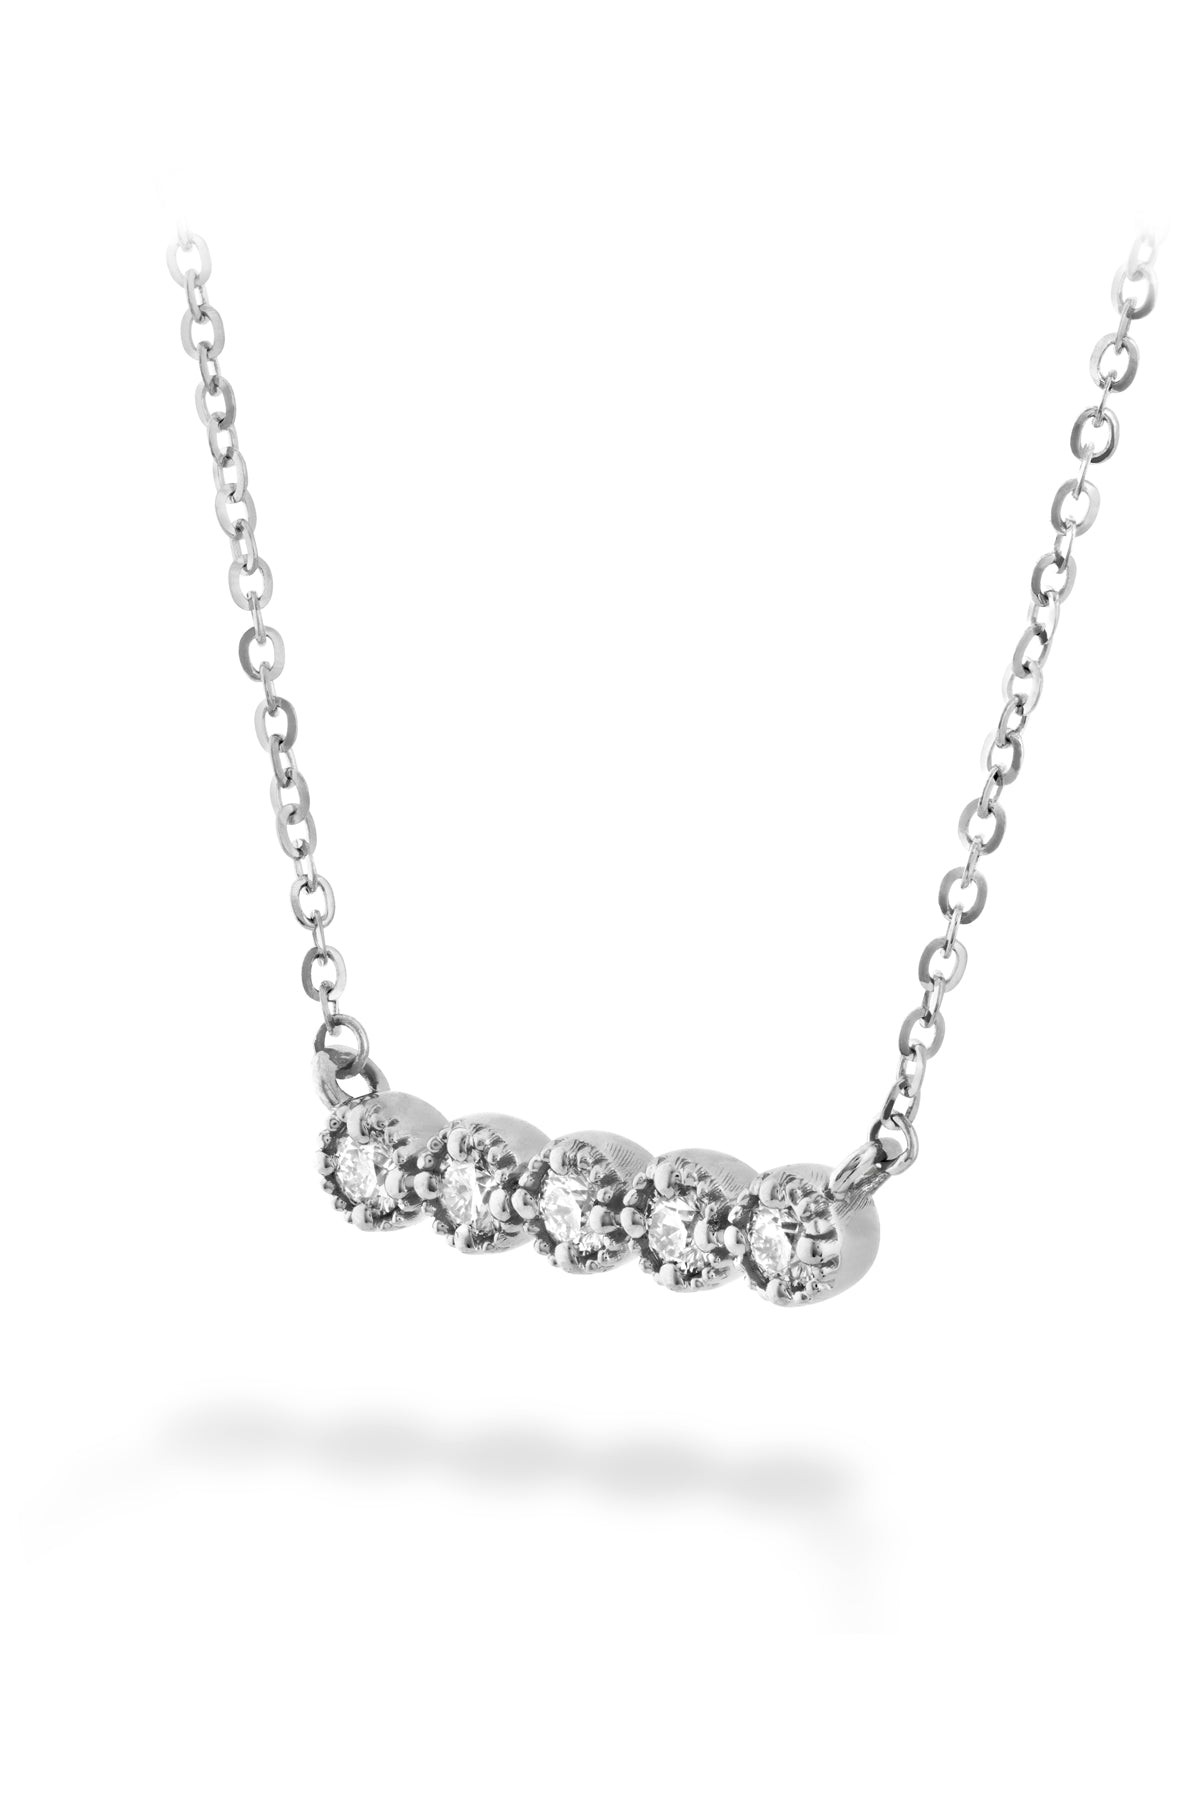 Liliana Milgrain Diamond Bar Necklace From Hearts On Fire available at LeGassick Diamonds and Jewellery Gold Coast, Australia.